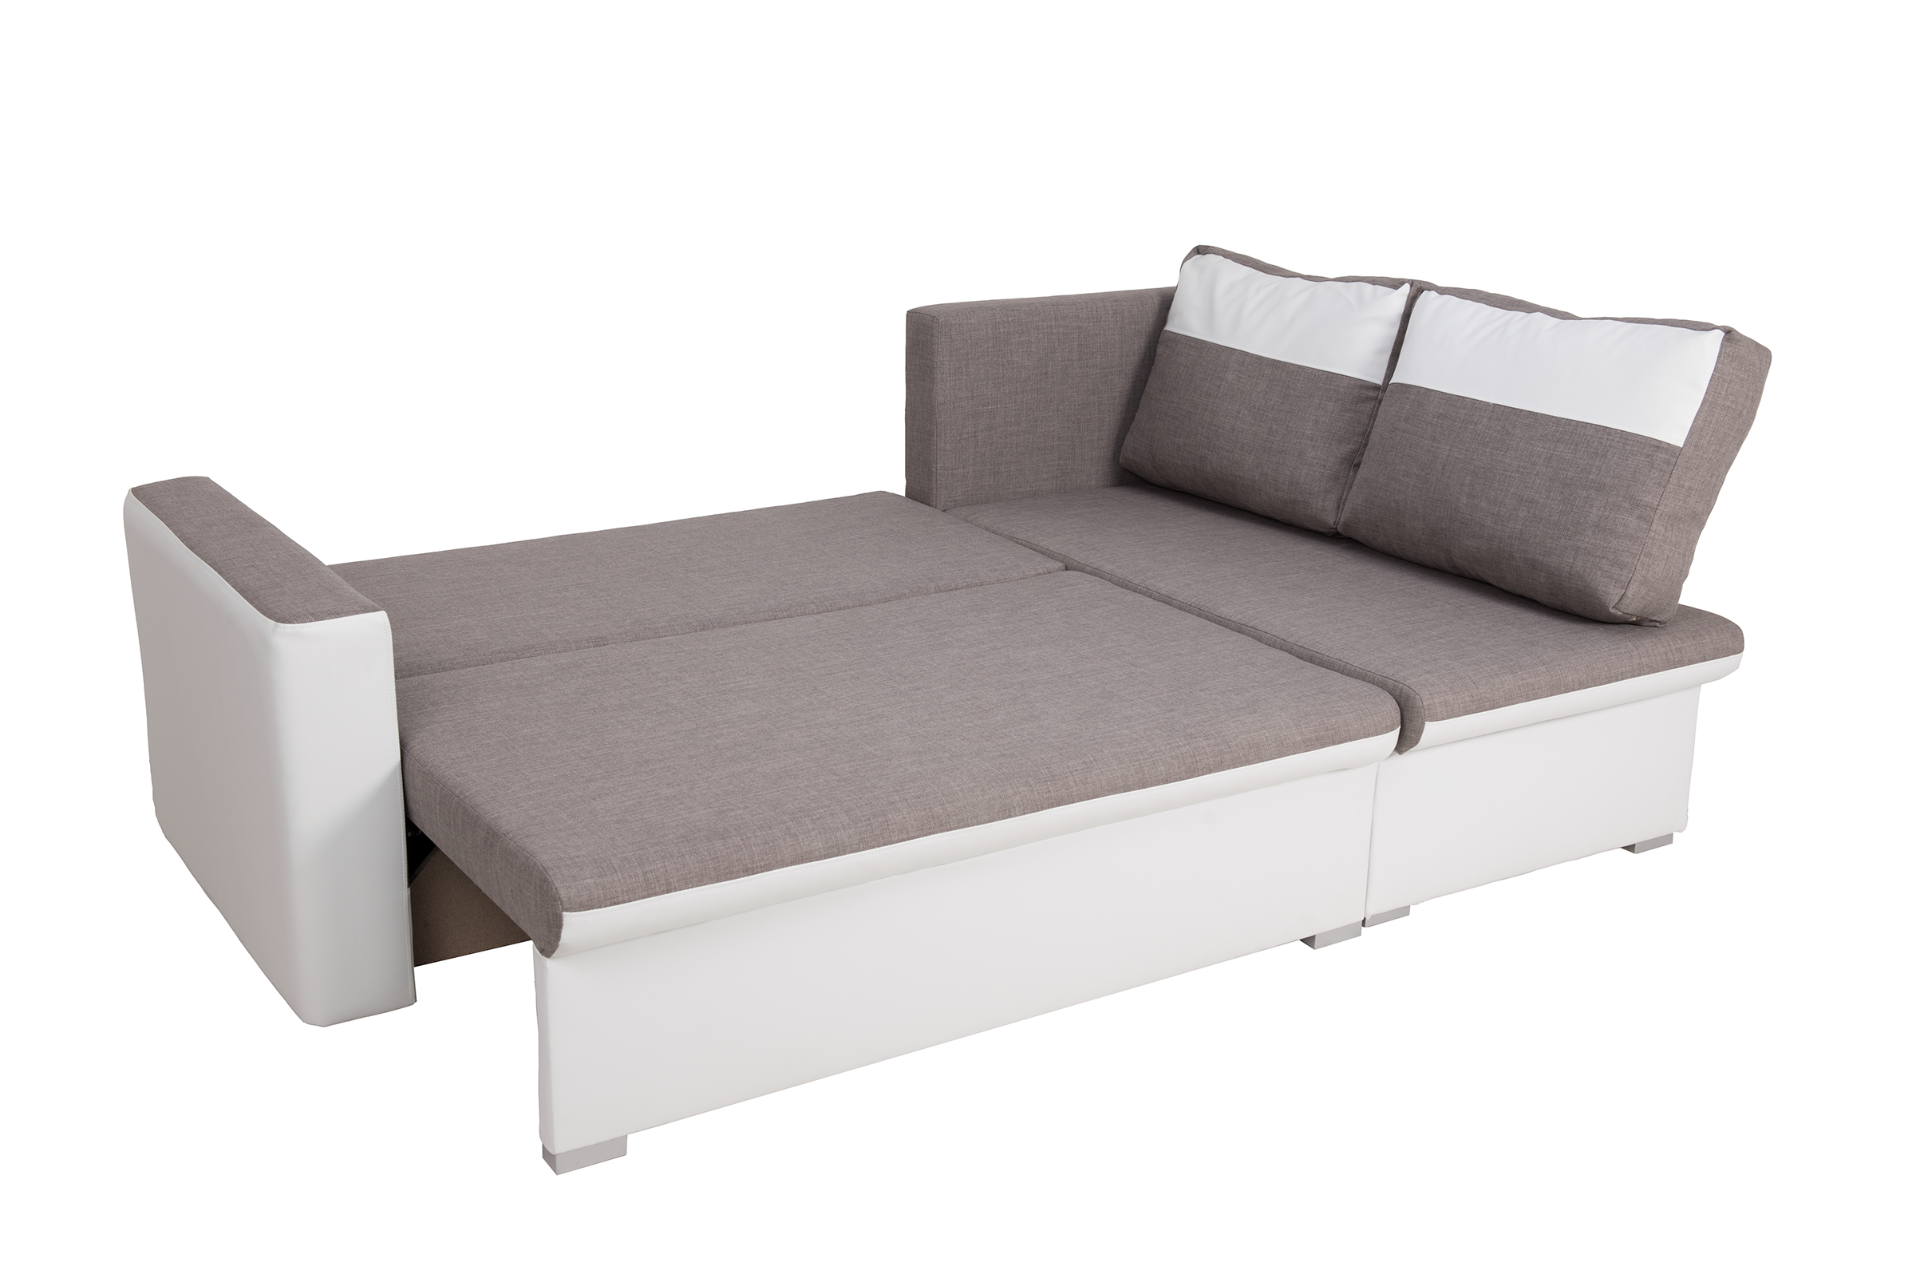 Brand New FlVio Right Hand Facing White/Grey Corner Pull Out Sofa Bed With Storage - Image 3 of 3